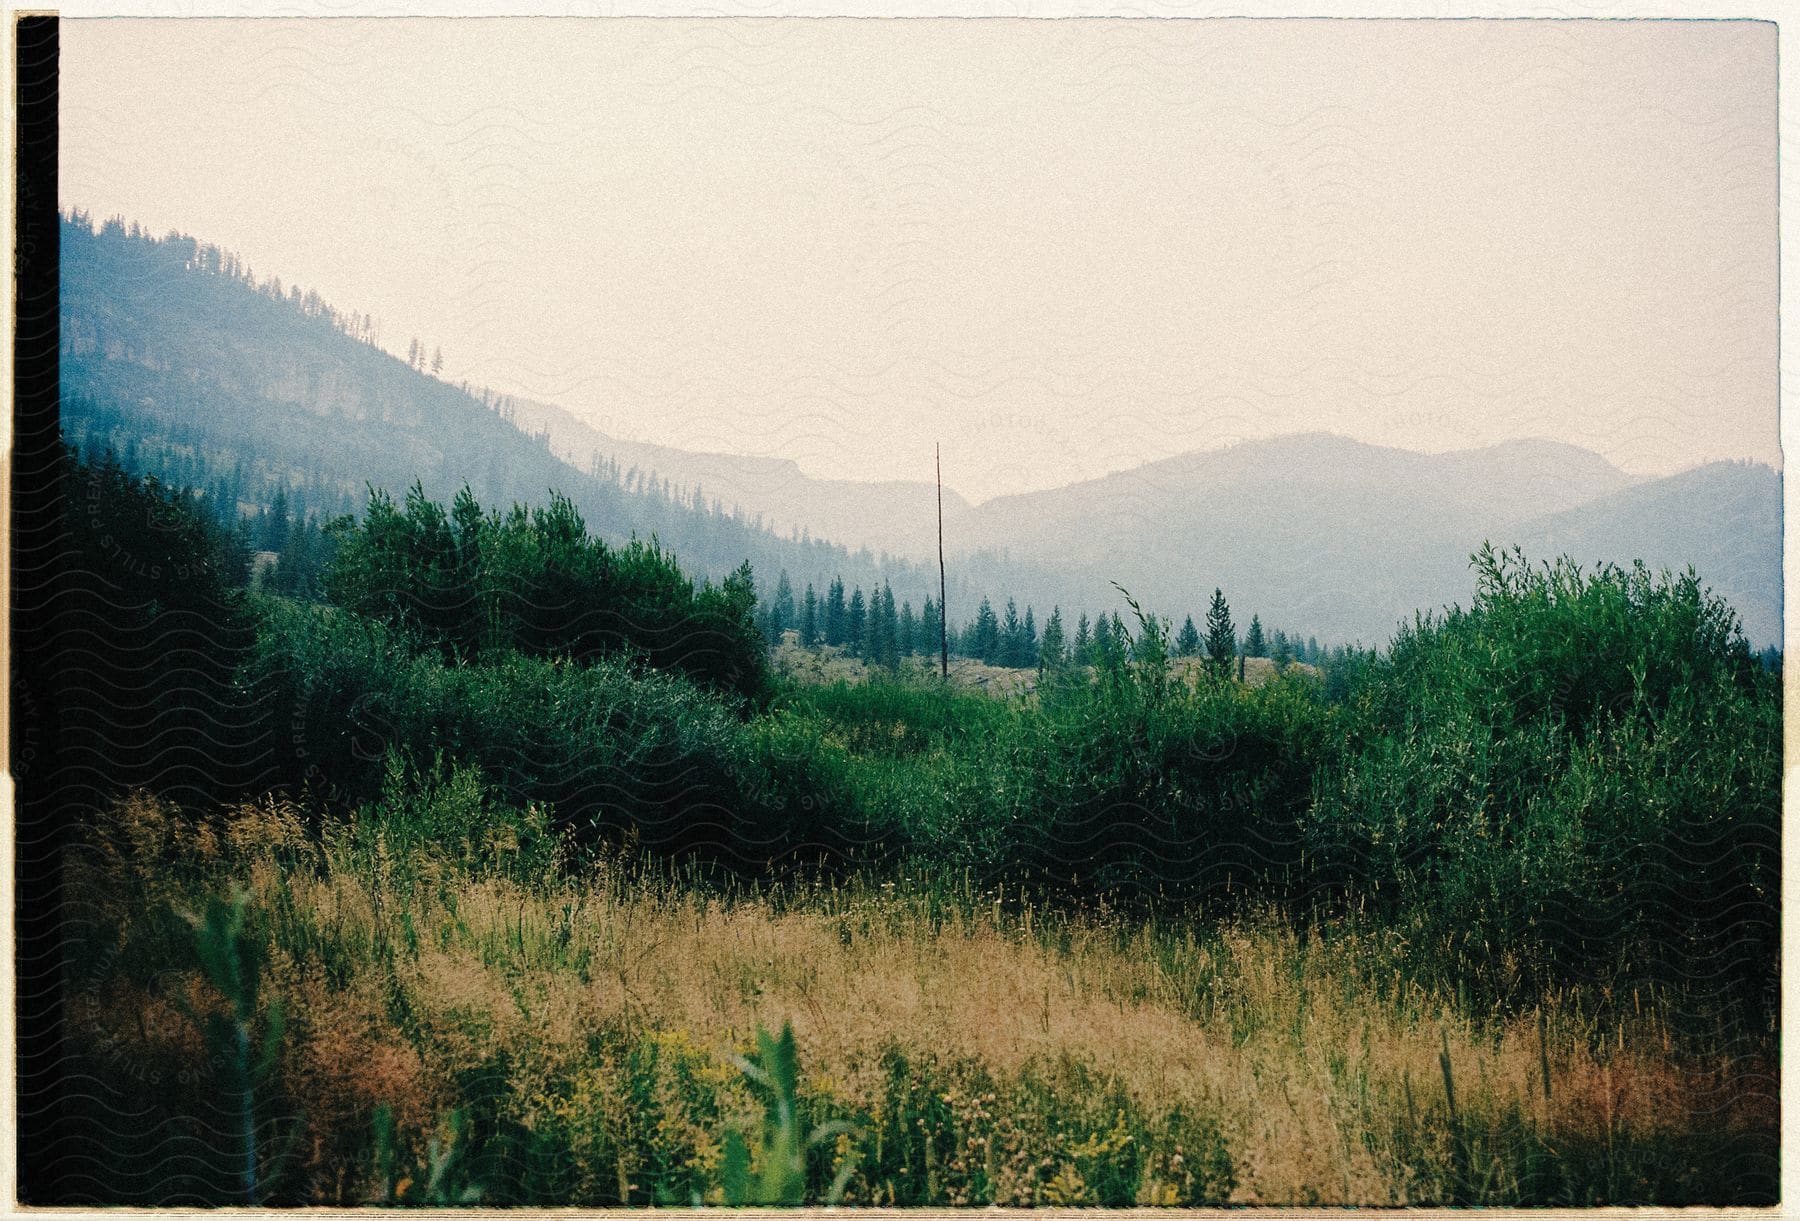 Tall weeds and shrubs grow along hills in montana